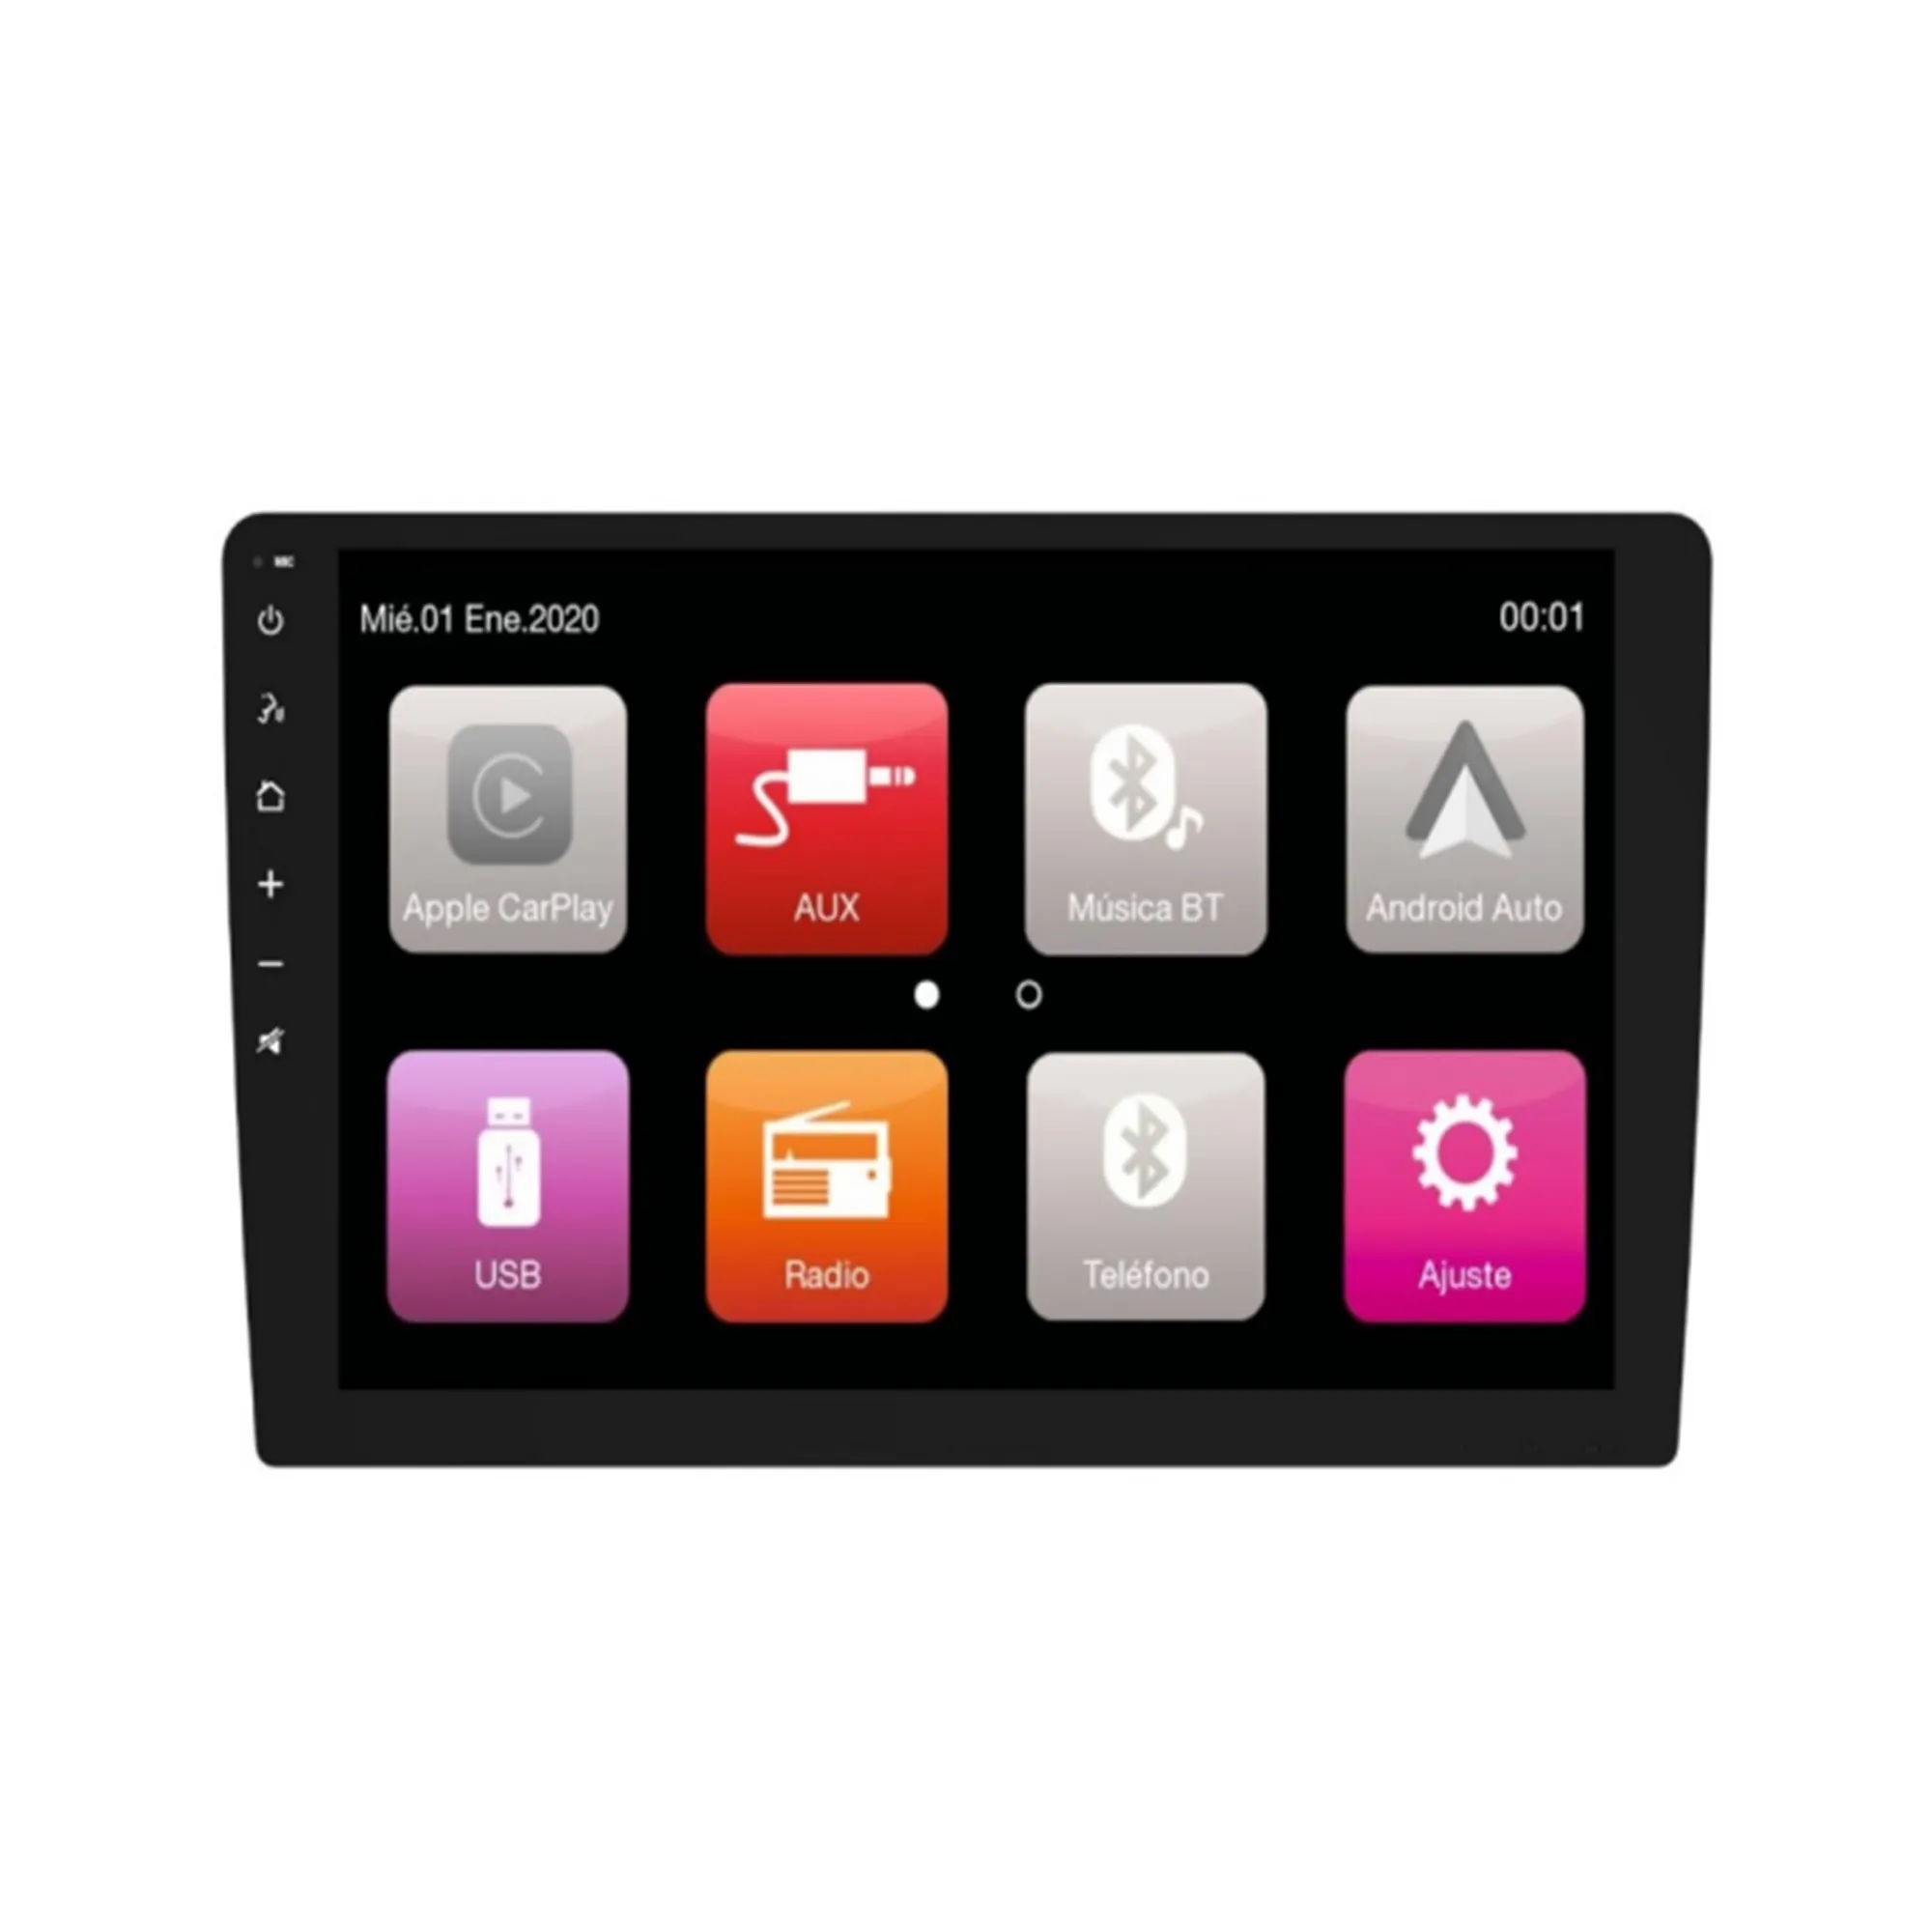 Evrensel araba oto dvd OYNATICI 9 inç ana ünite ile Apple Carplay ve Android otomatik